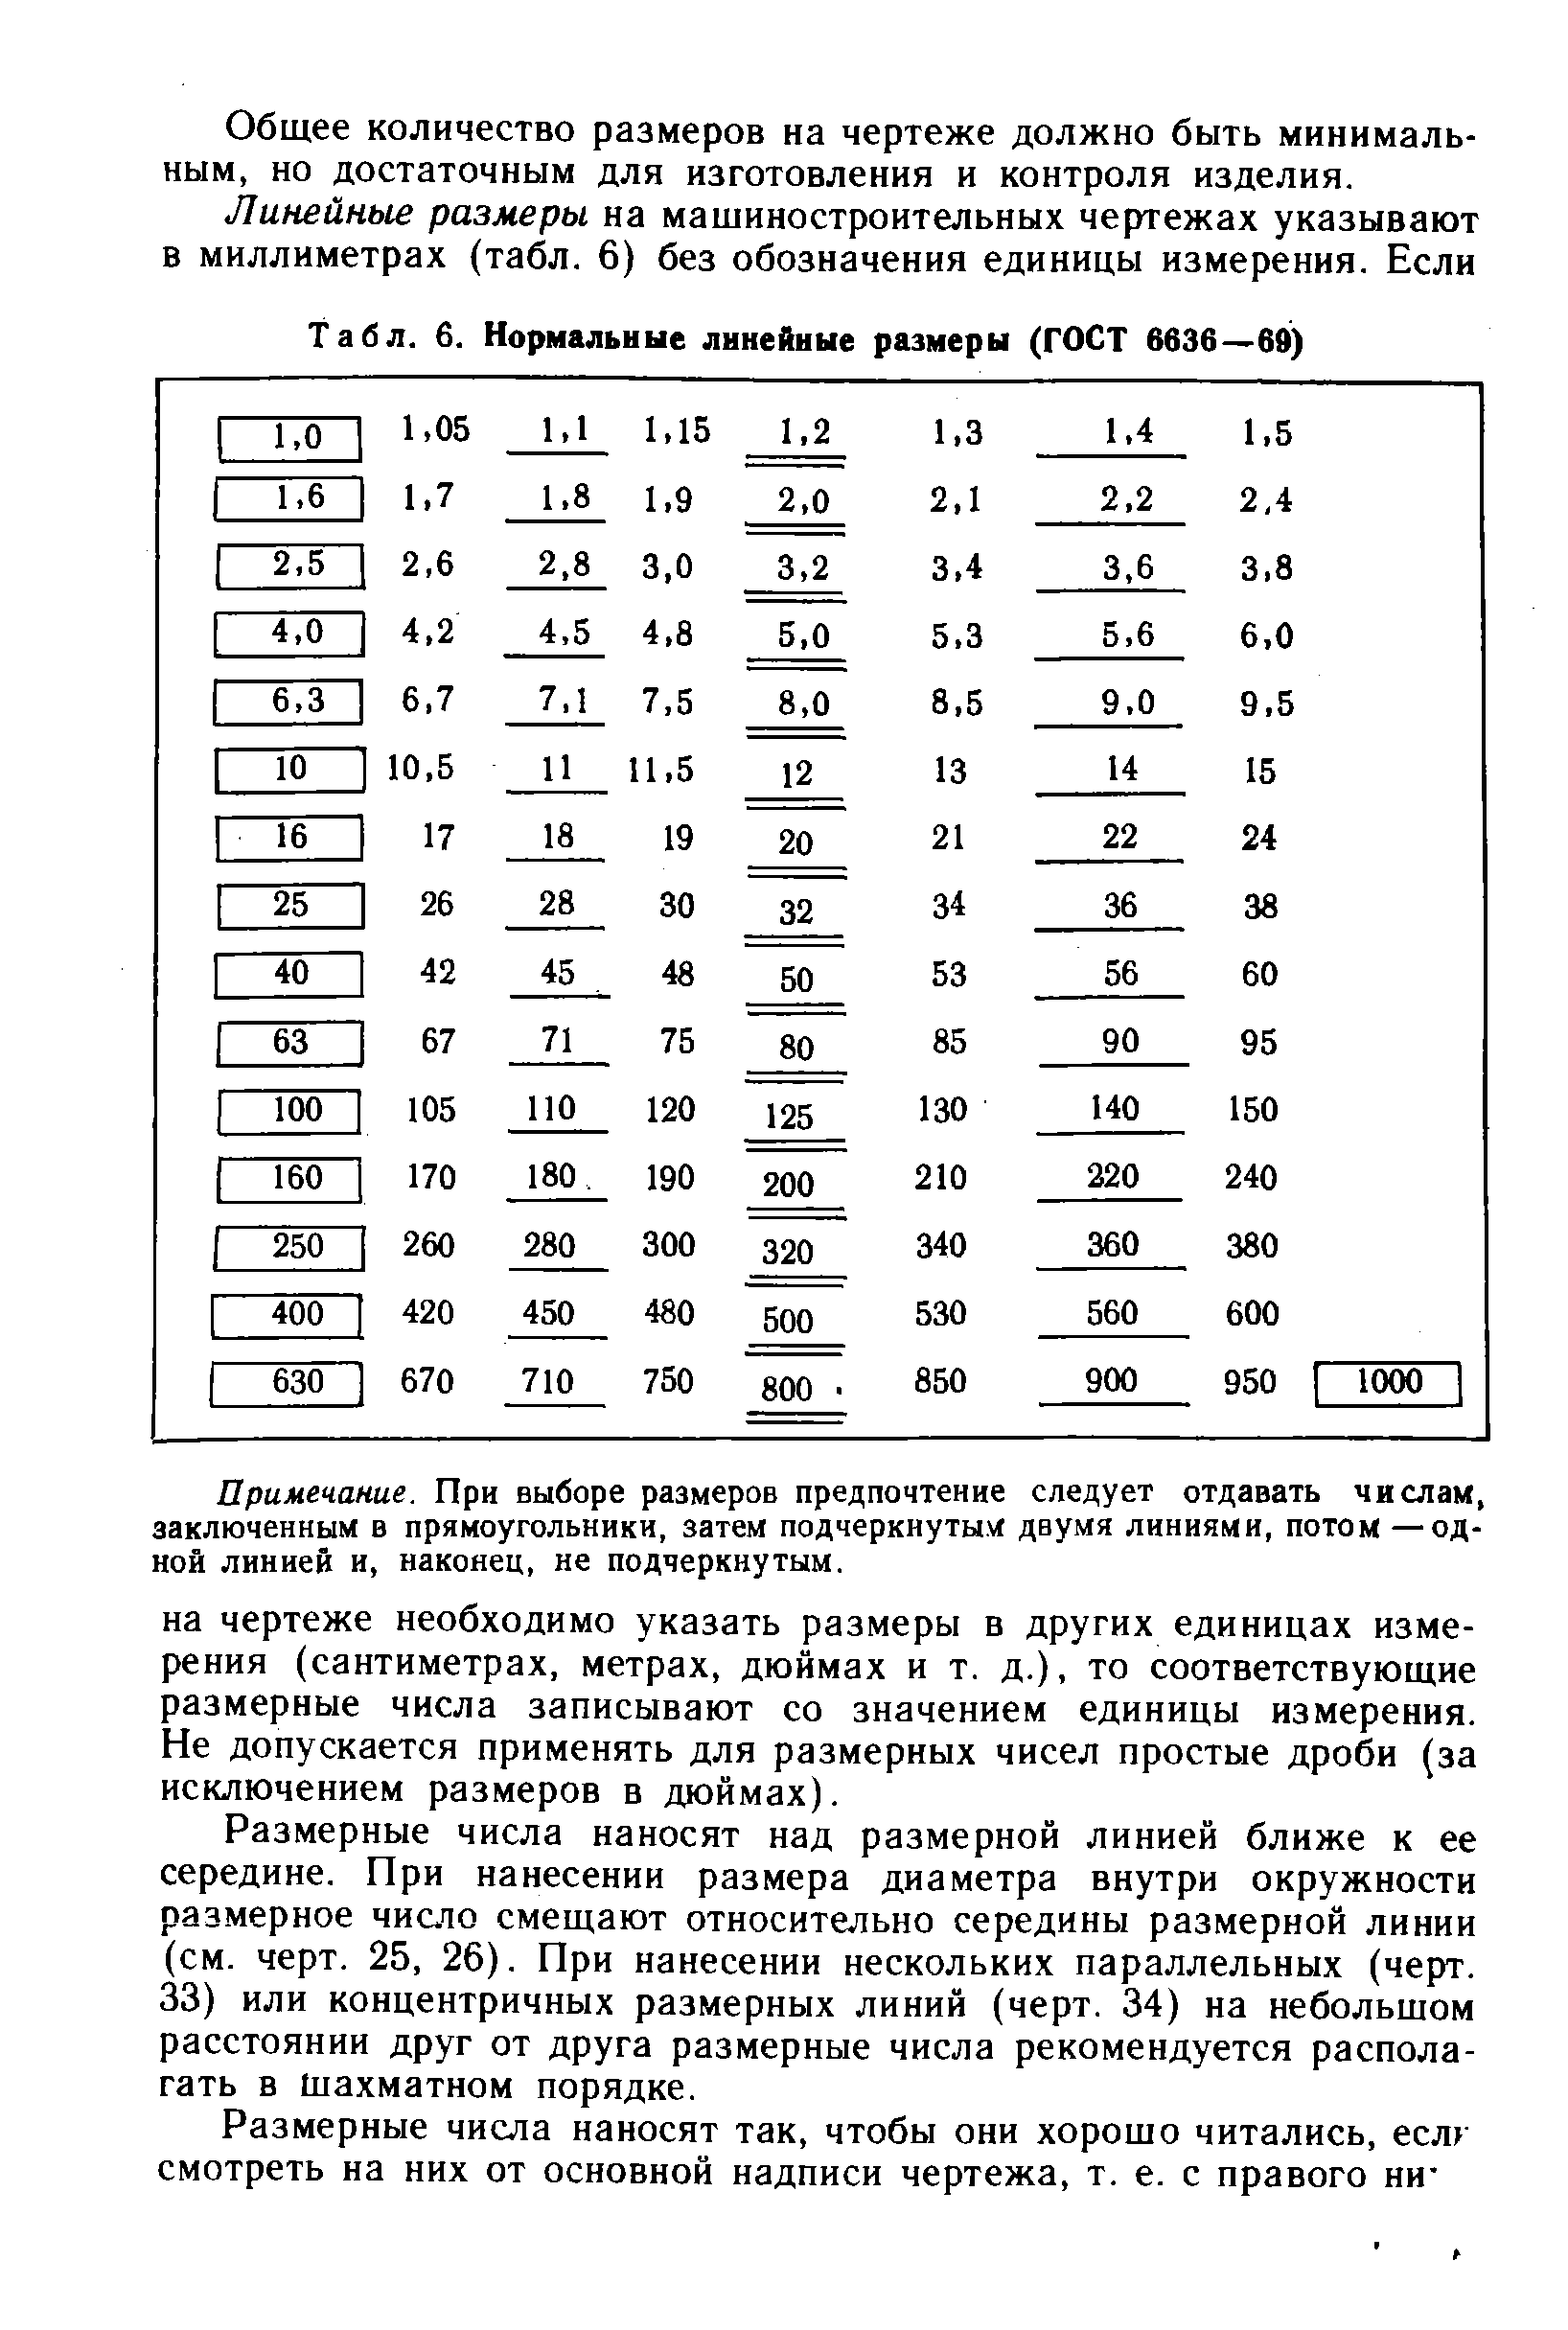 Табл. 6. <a href="/info/118626">Нормальные линейные размеры</a> (ГОСТ 6636—69)
